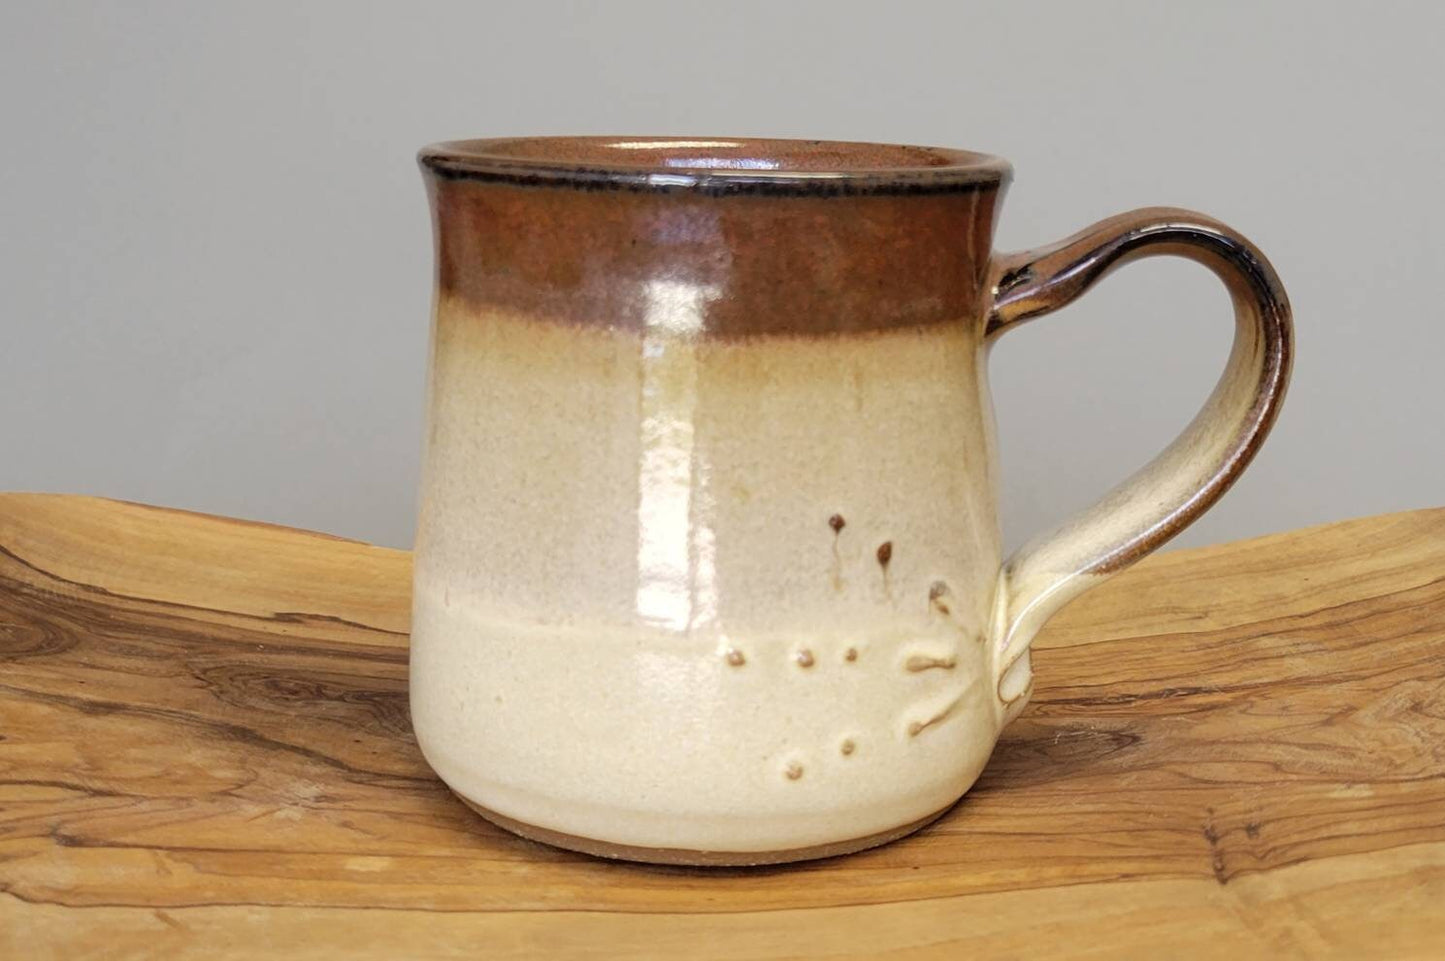 Brown Ceramic Coffee Mug 8.5 oz - Handmade Rustic Stoneware